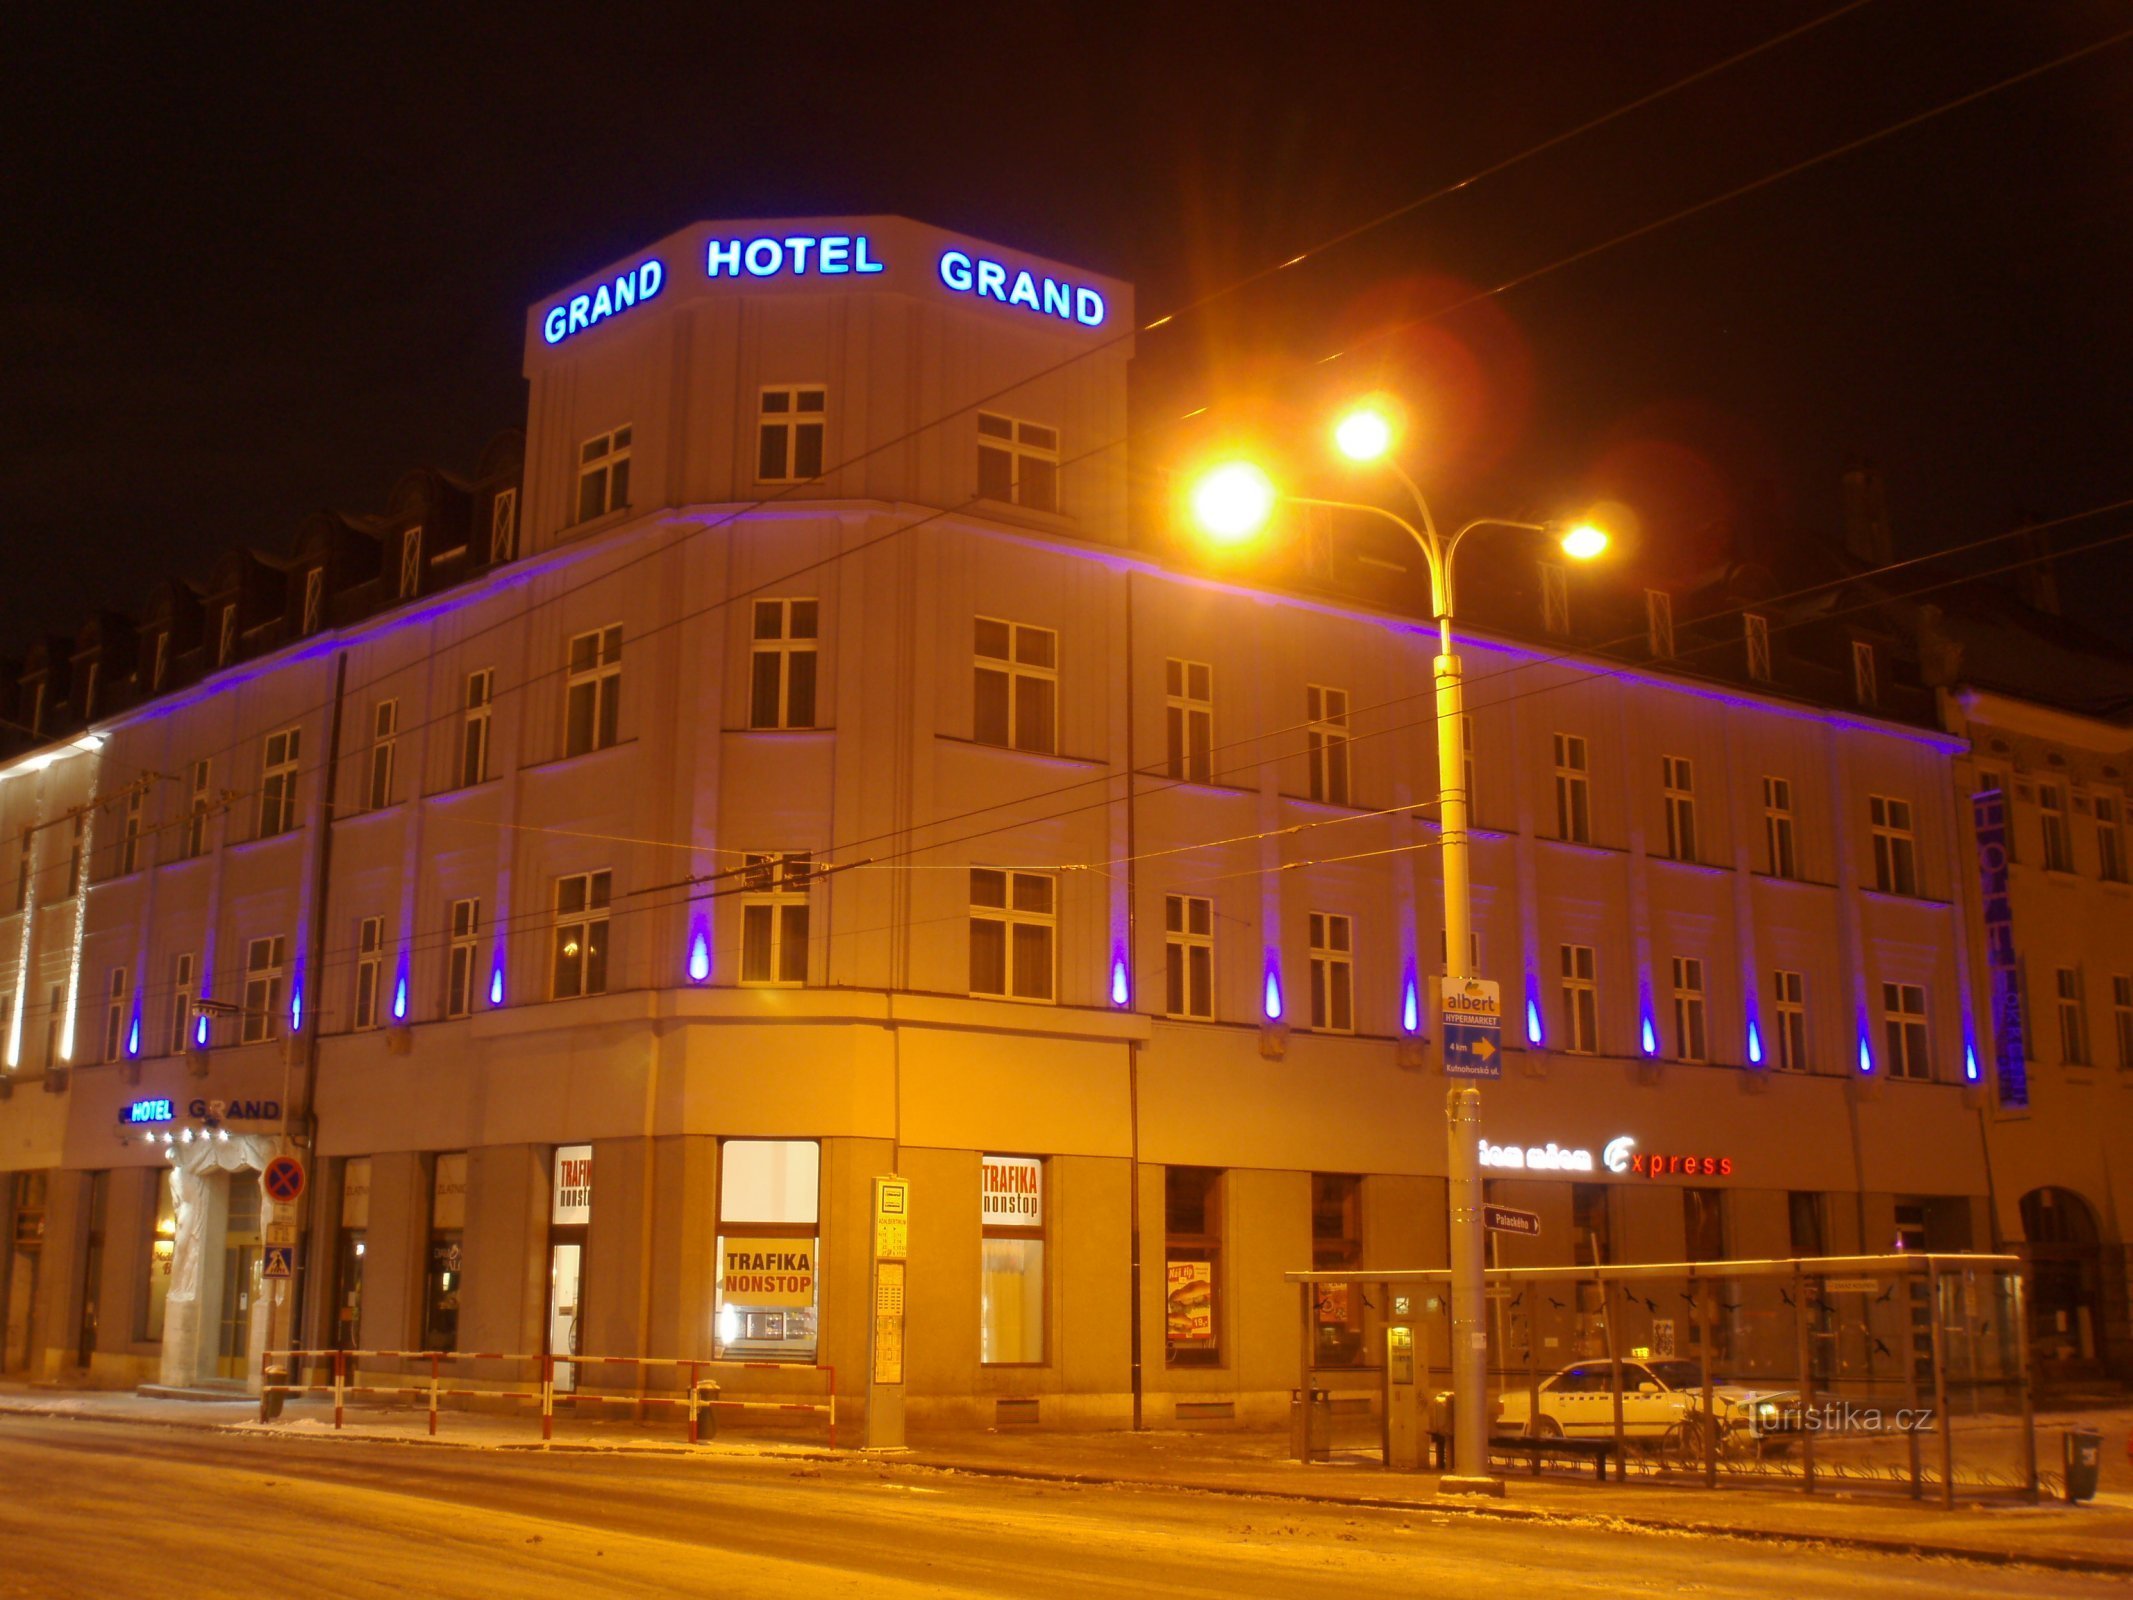 Grandhotel Urban (Hradec Králové, 26.12.2010/XNUMX/XNUMX)